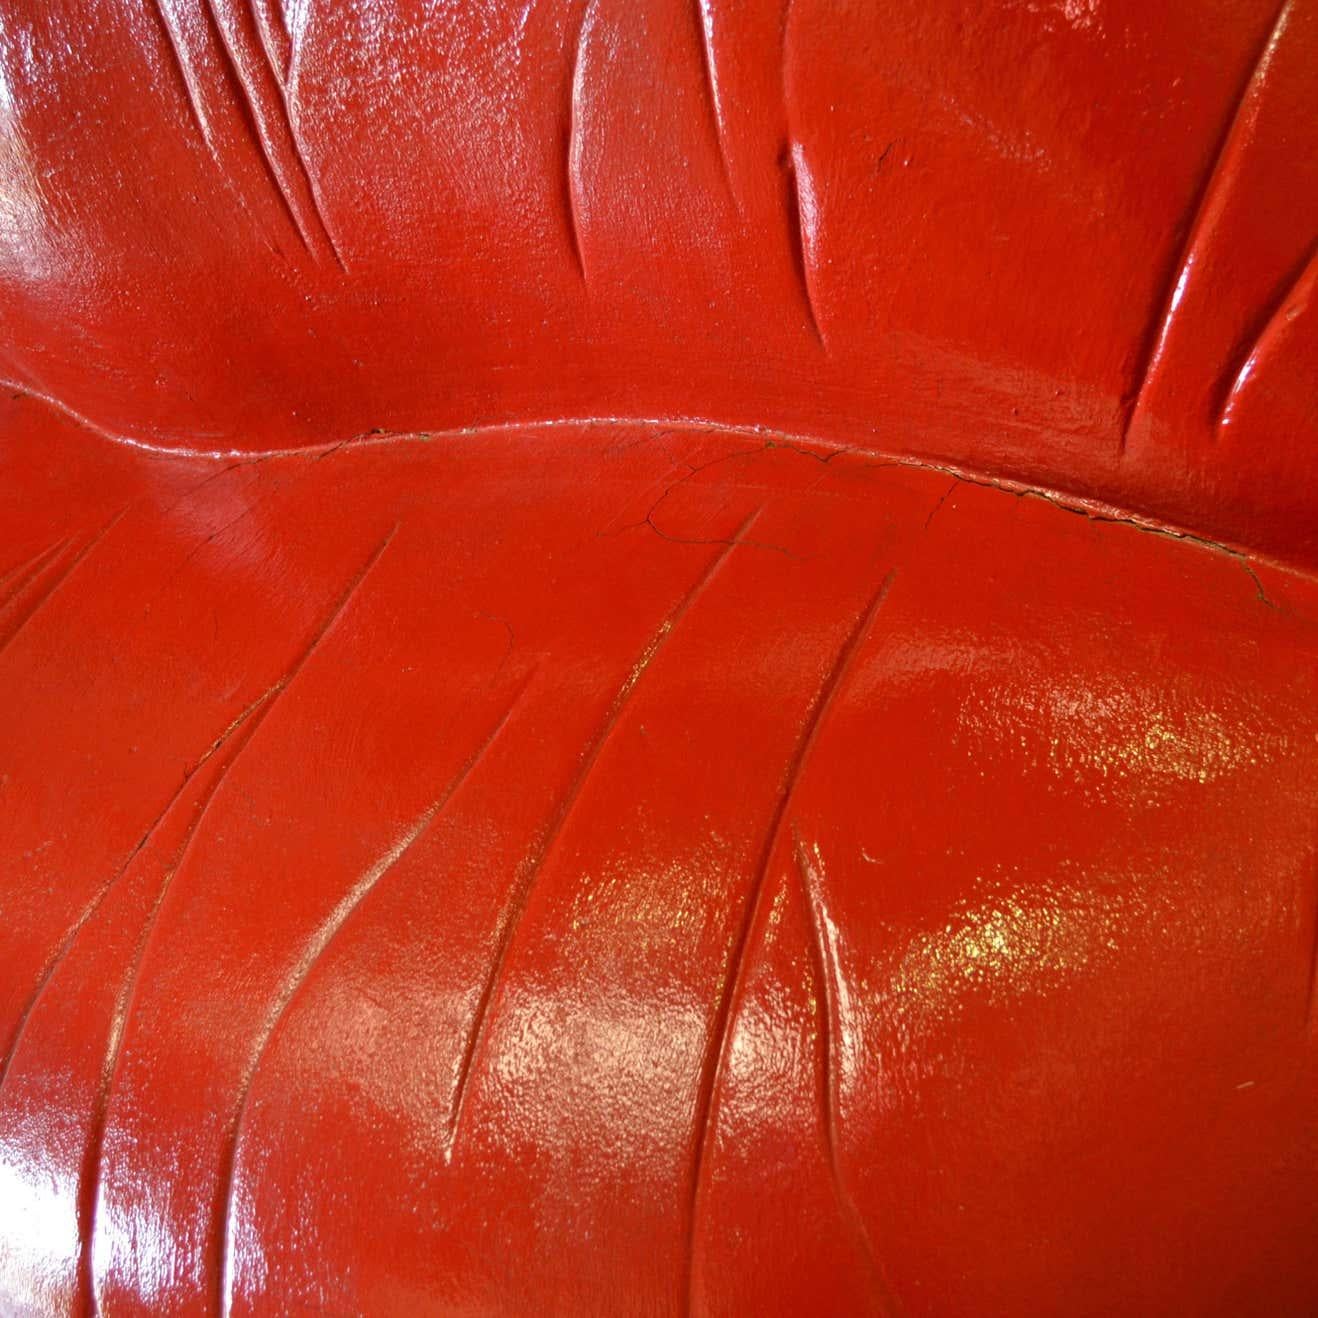 Foam Salvador Dali Surrealist 'Salivasofa' Unique Prototype Red Lips Sofa For Sale